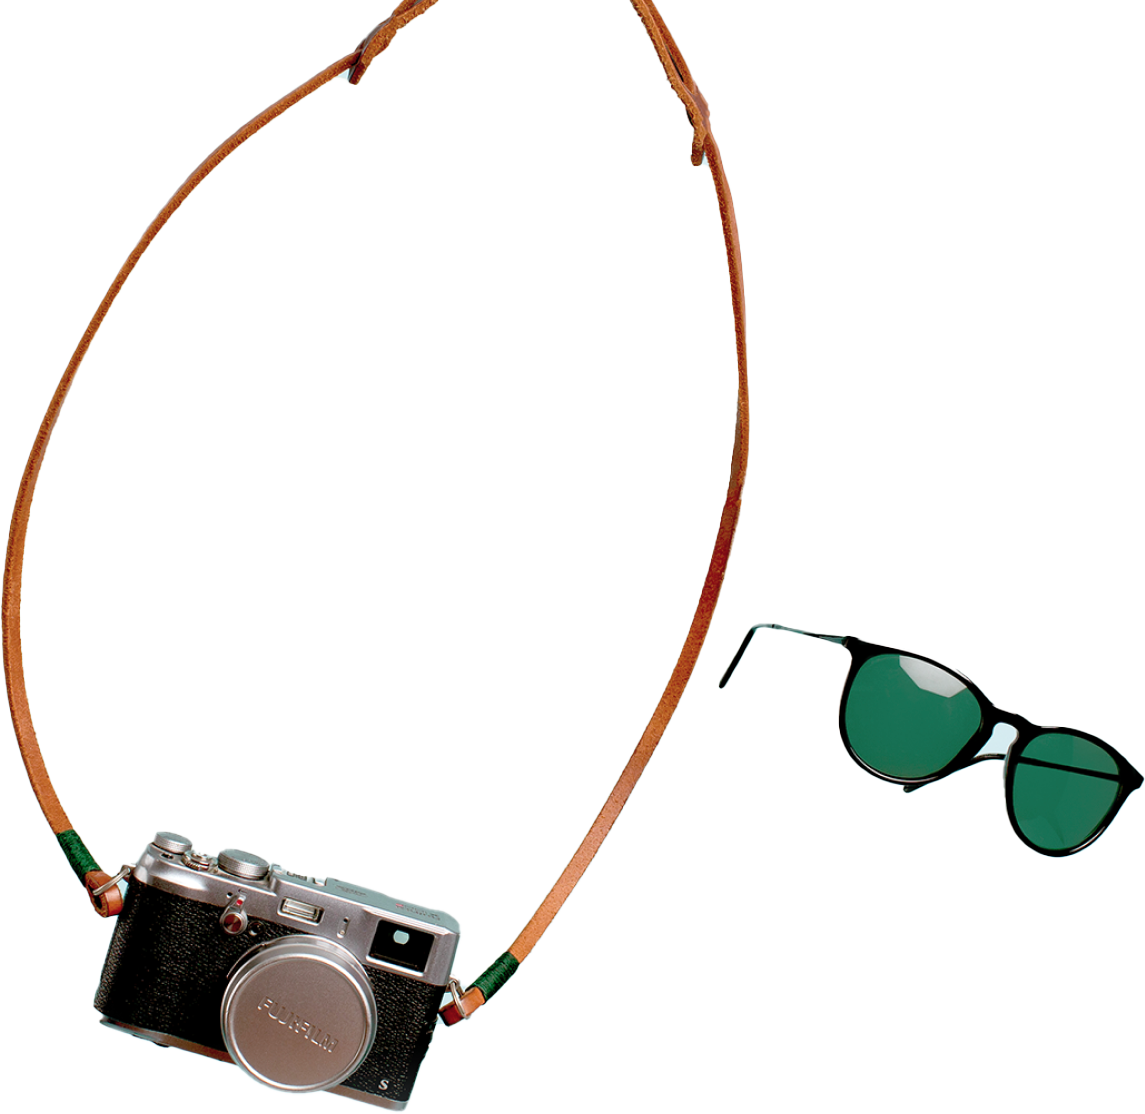 Camera and sunglasses